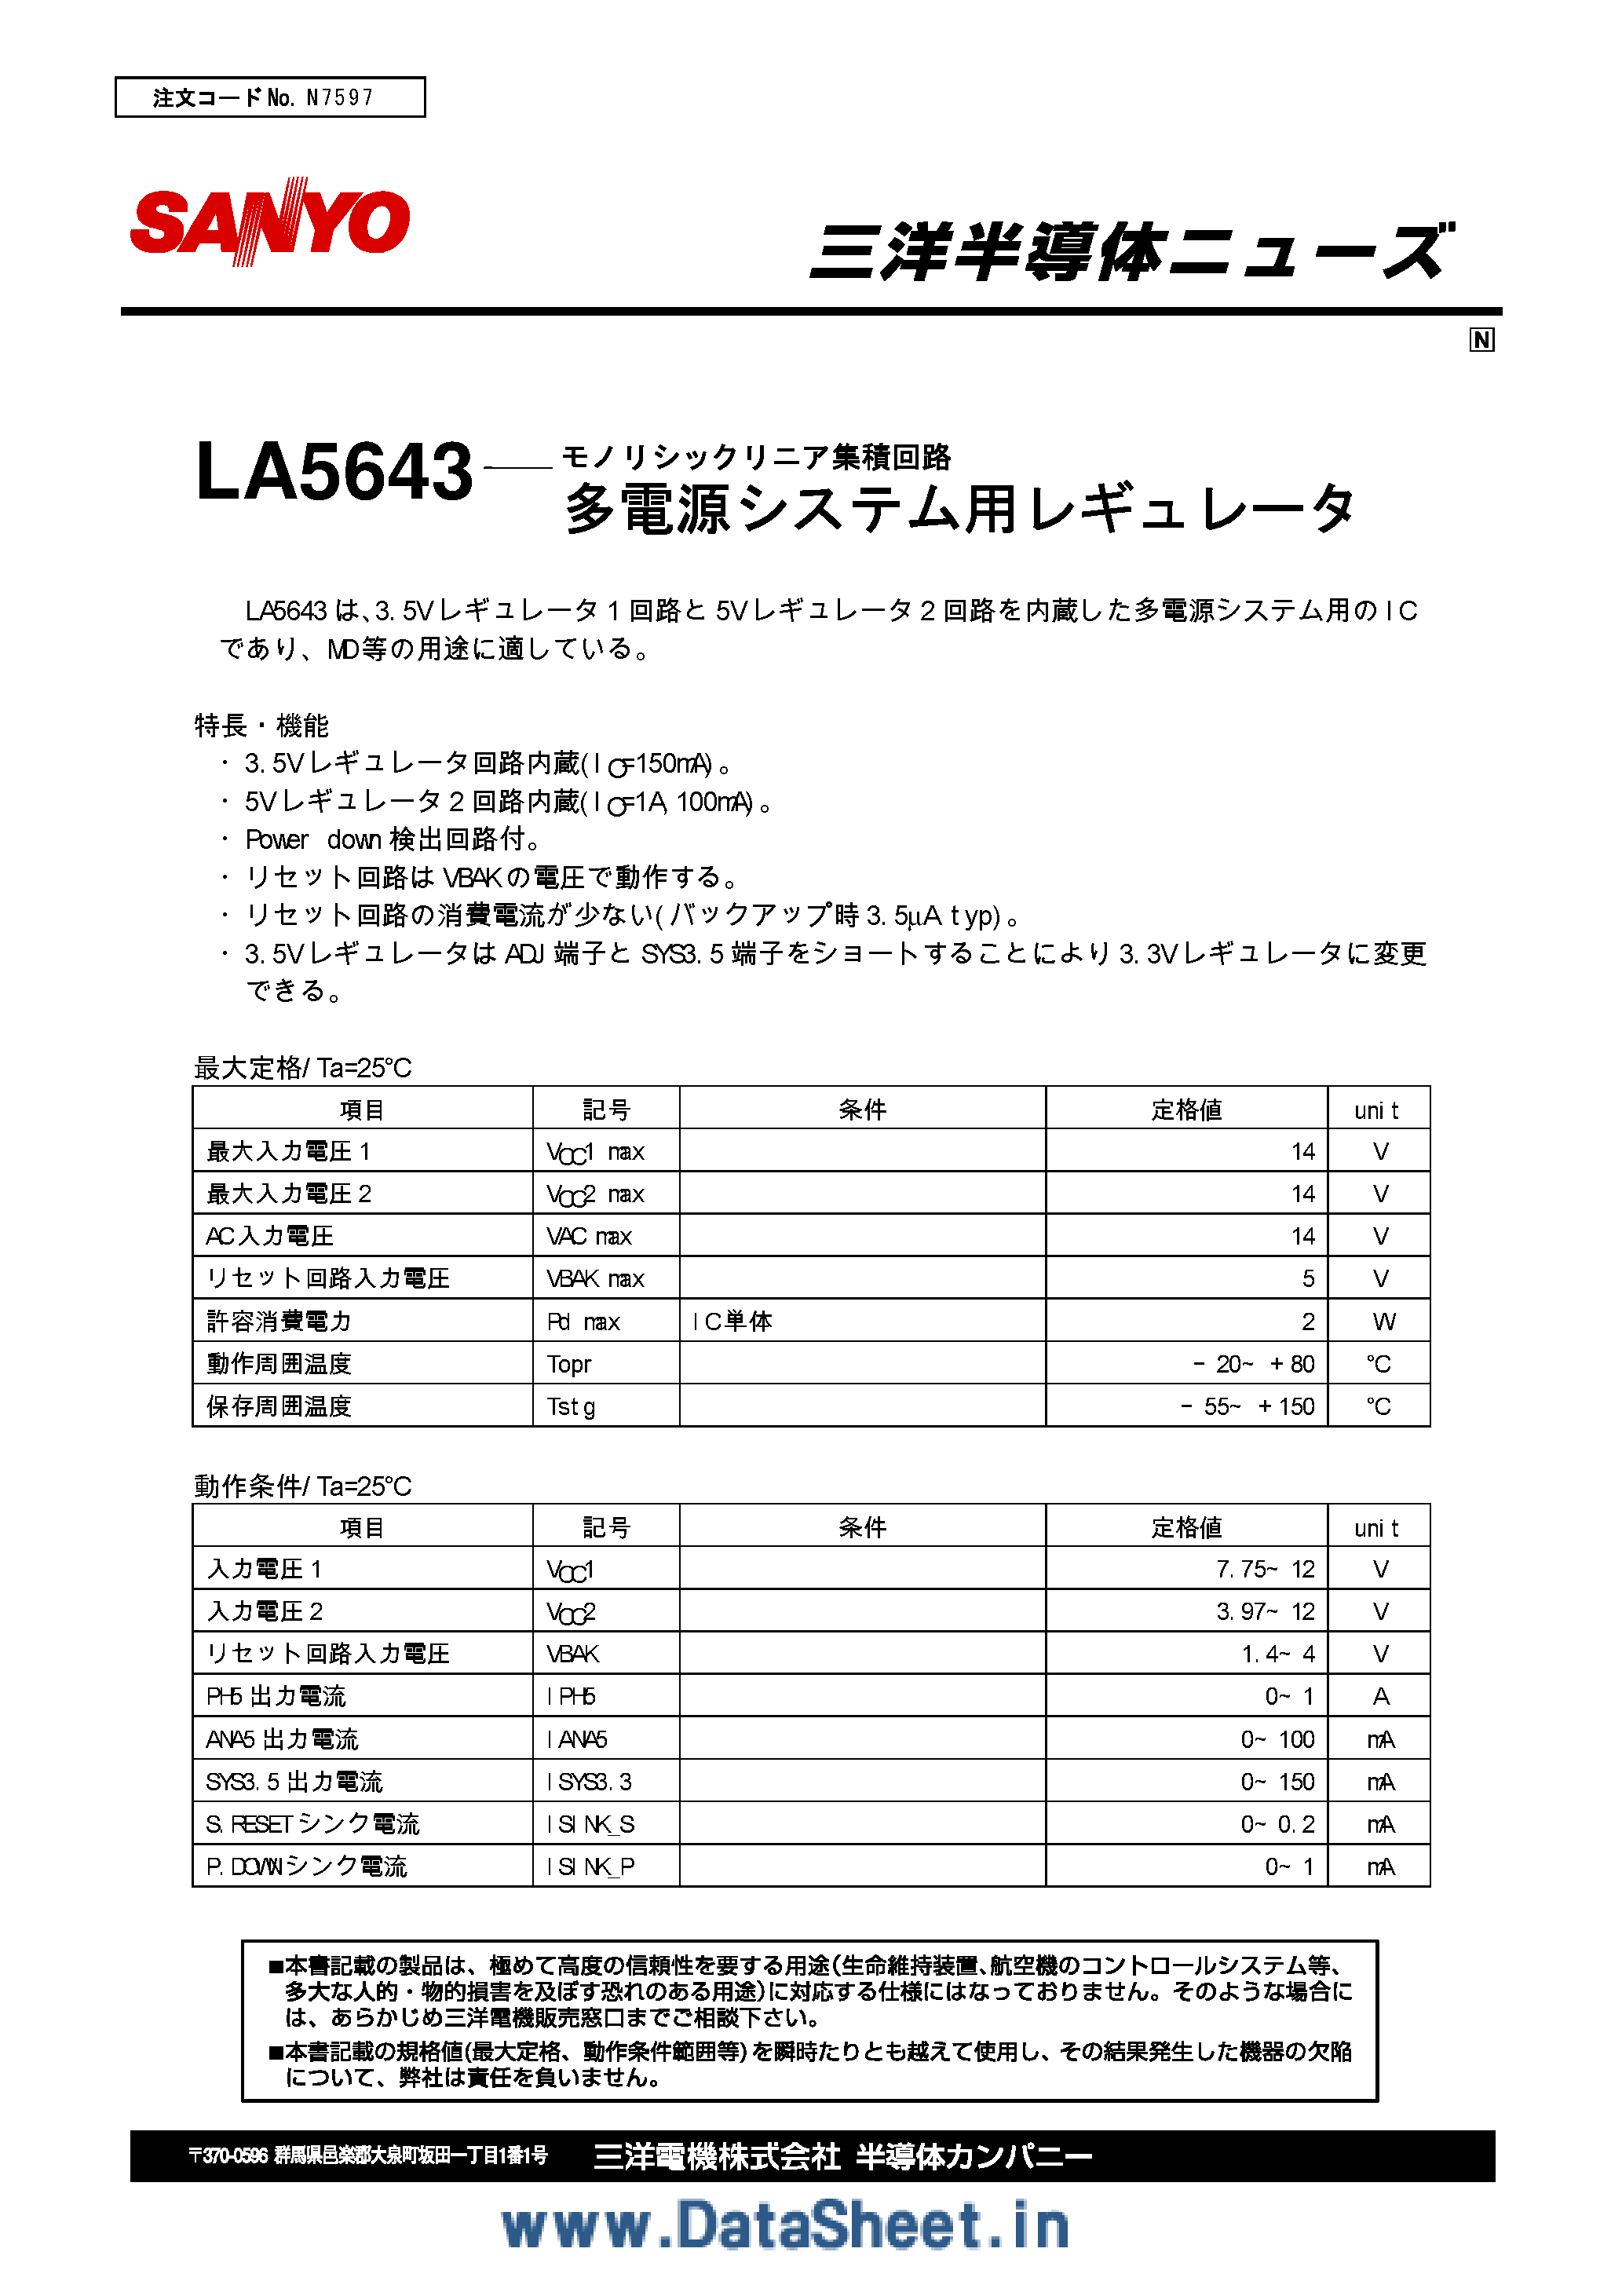 Datasheet LA5643 - LA5643 / Japanese page 1